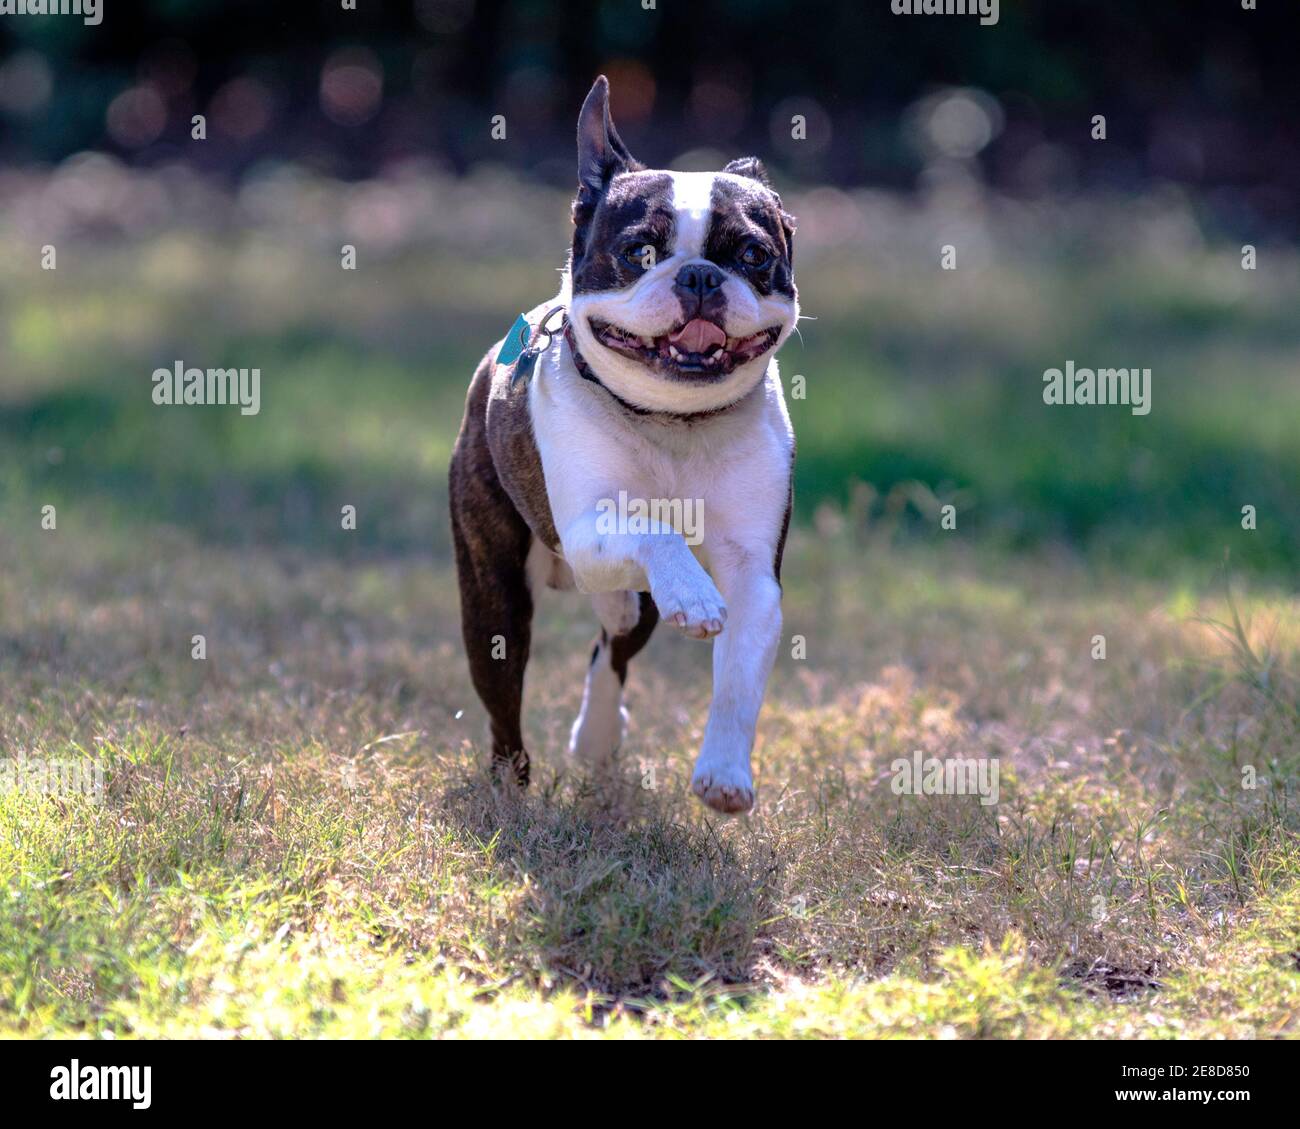 Greying Boston Terrier runs playfully toward the camera Stock Photo